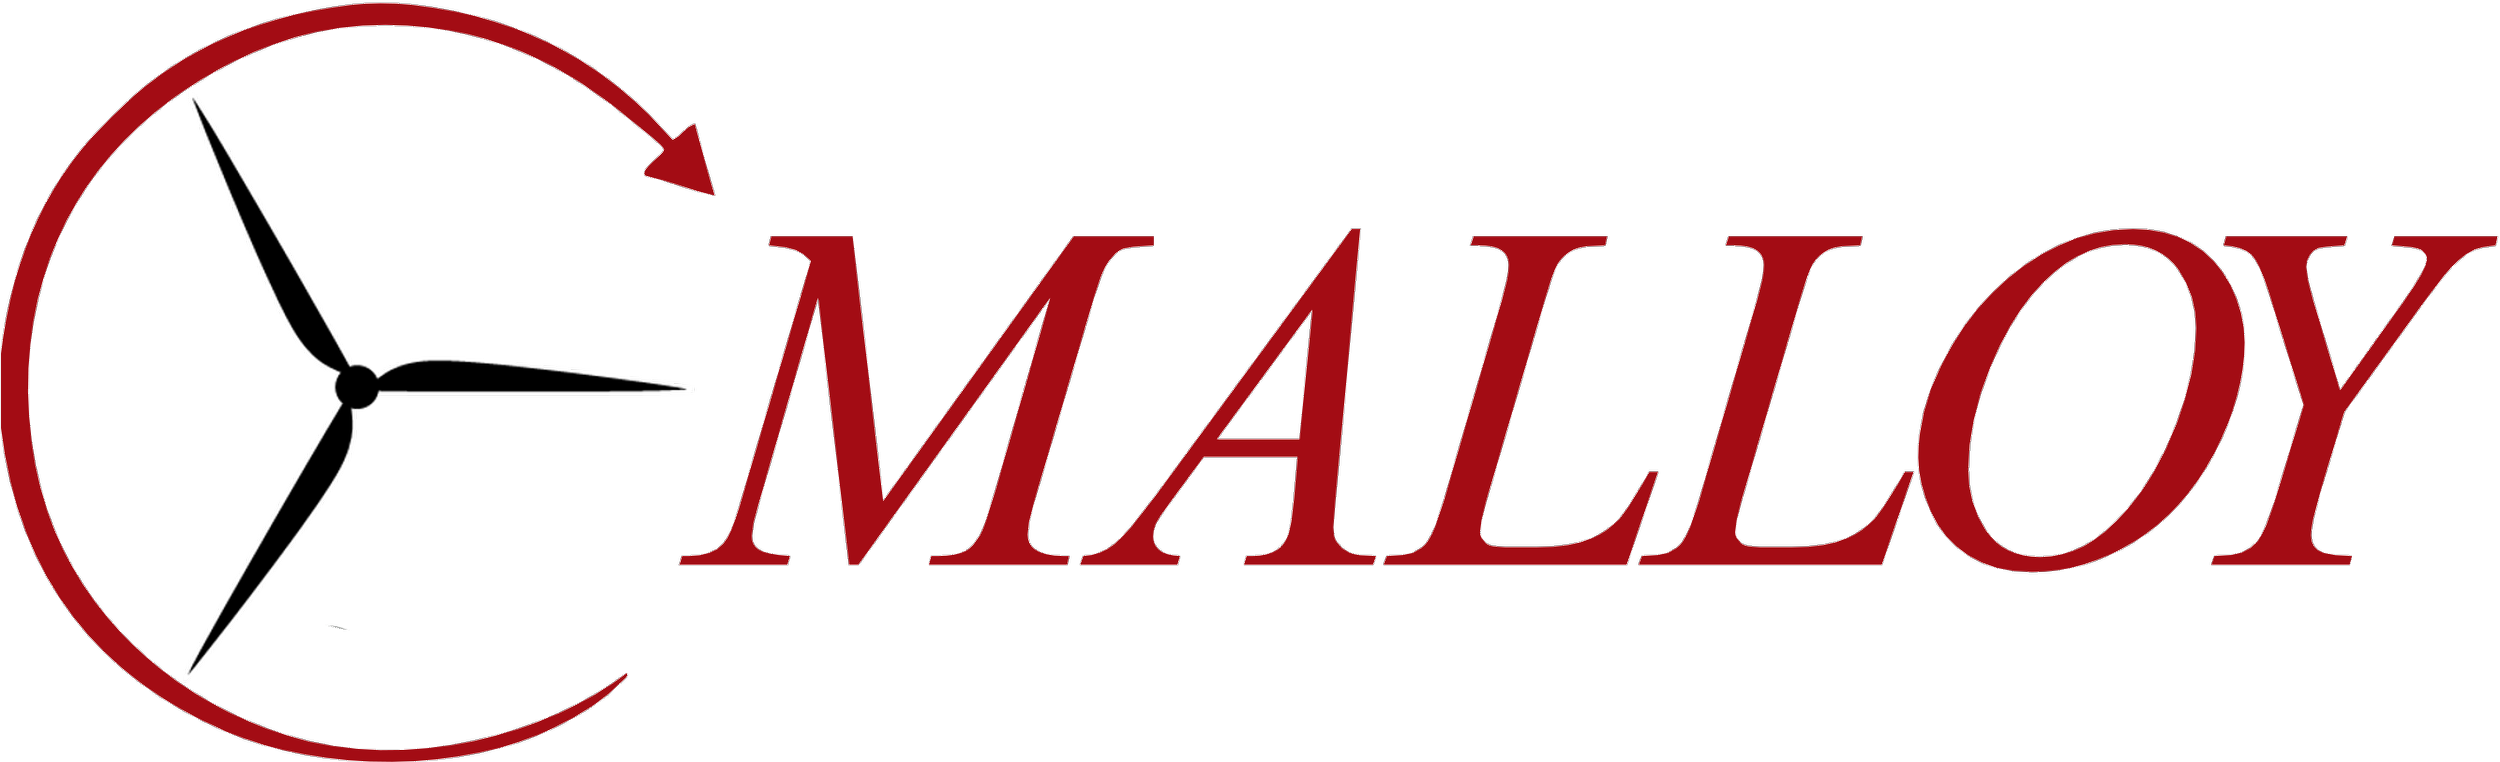 Malloy Wind Warehouse logo